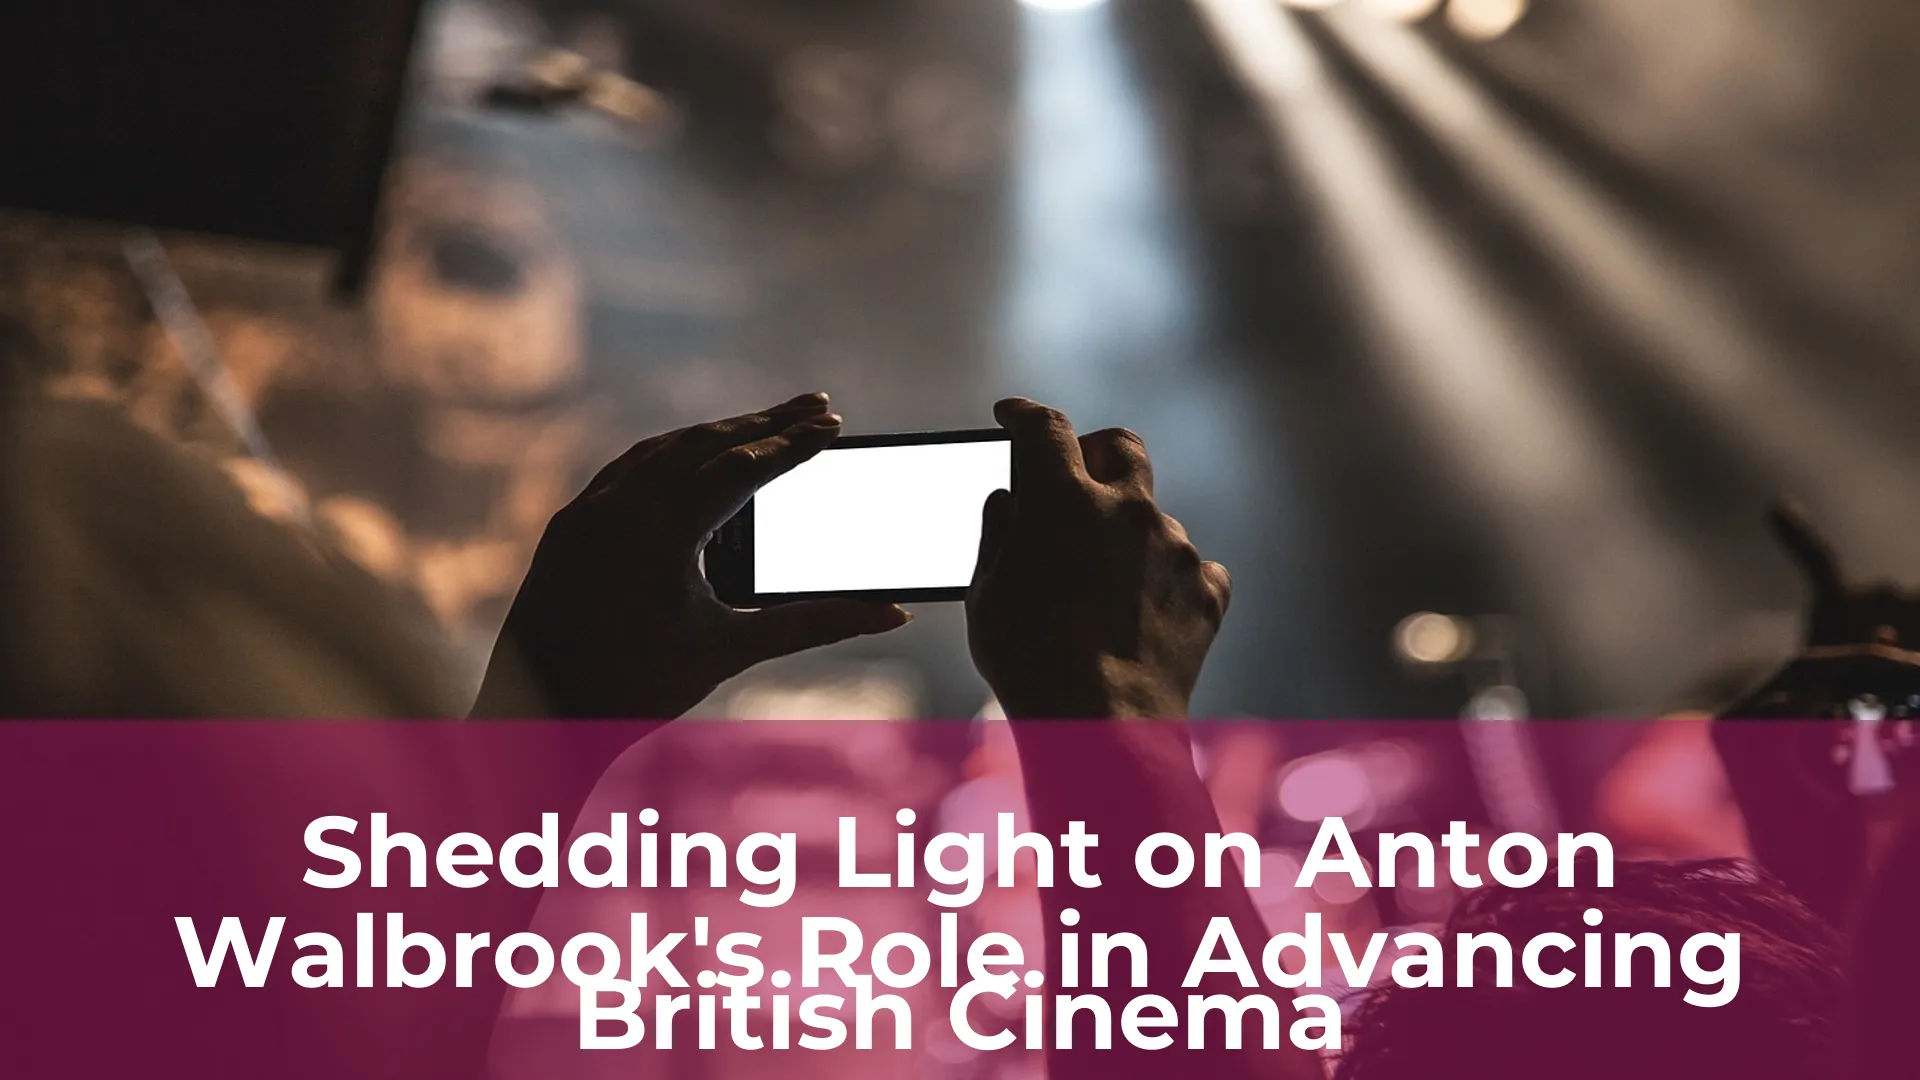 Shedding light on anton walbrooks role in advancing british cinema